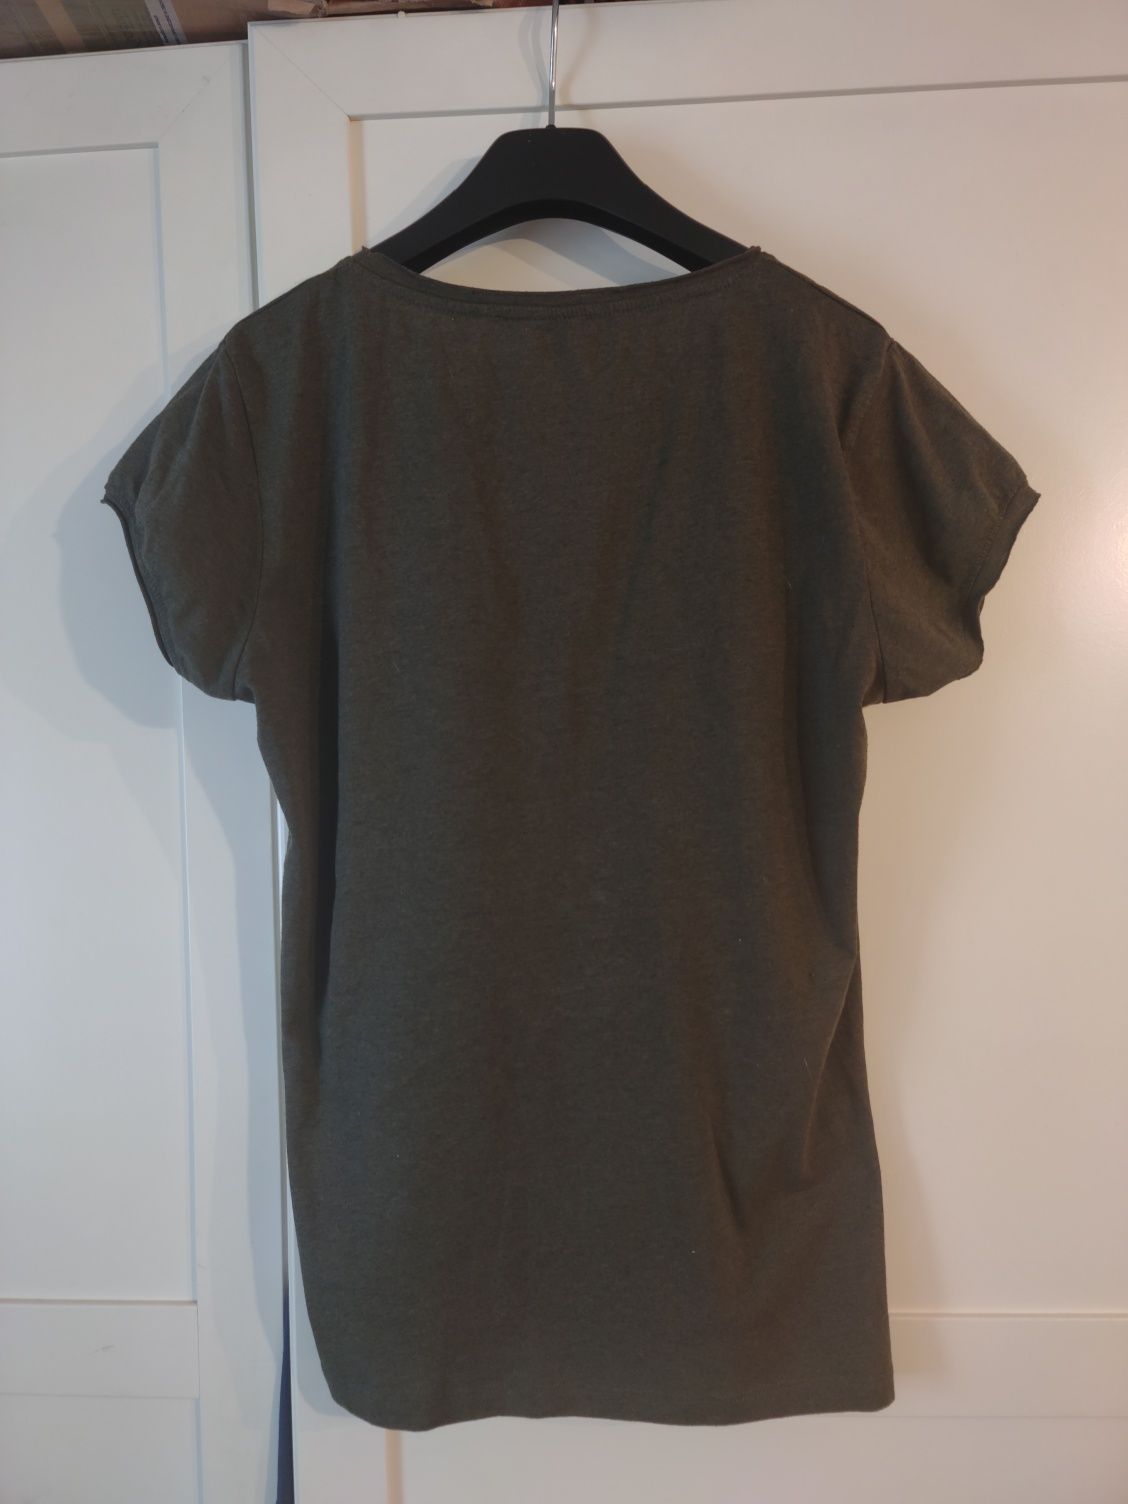 T-shirt FB Sister - khaki, ciemnozielony - krótki rękawek - r. 42